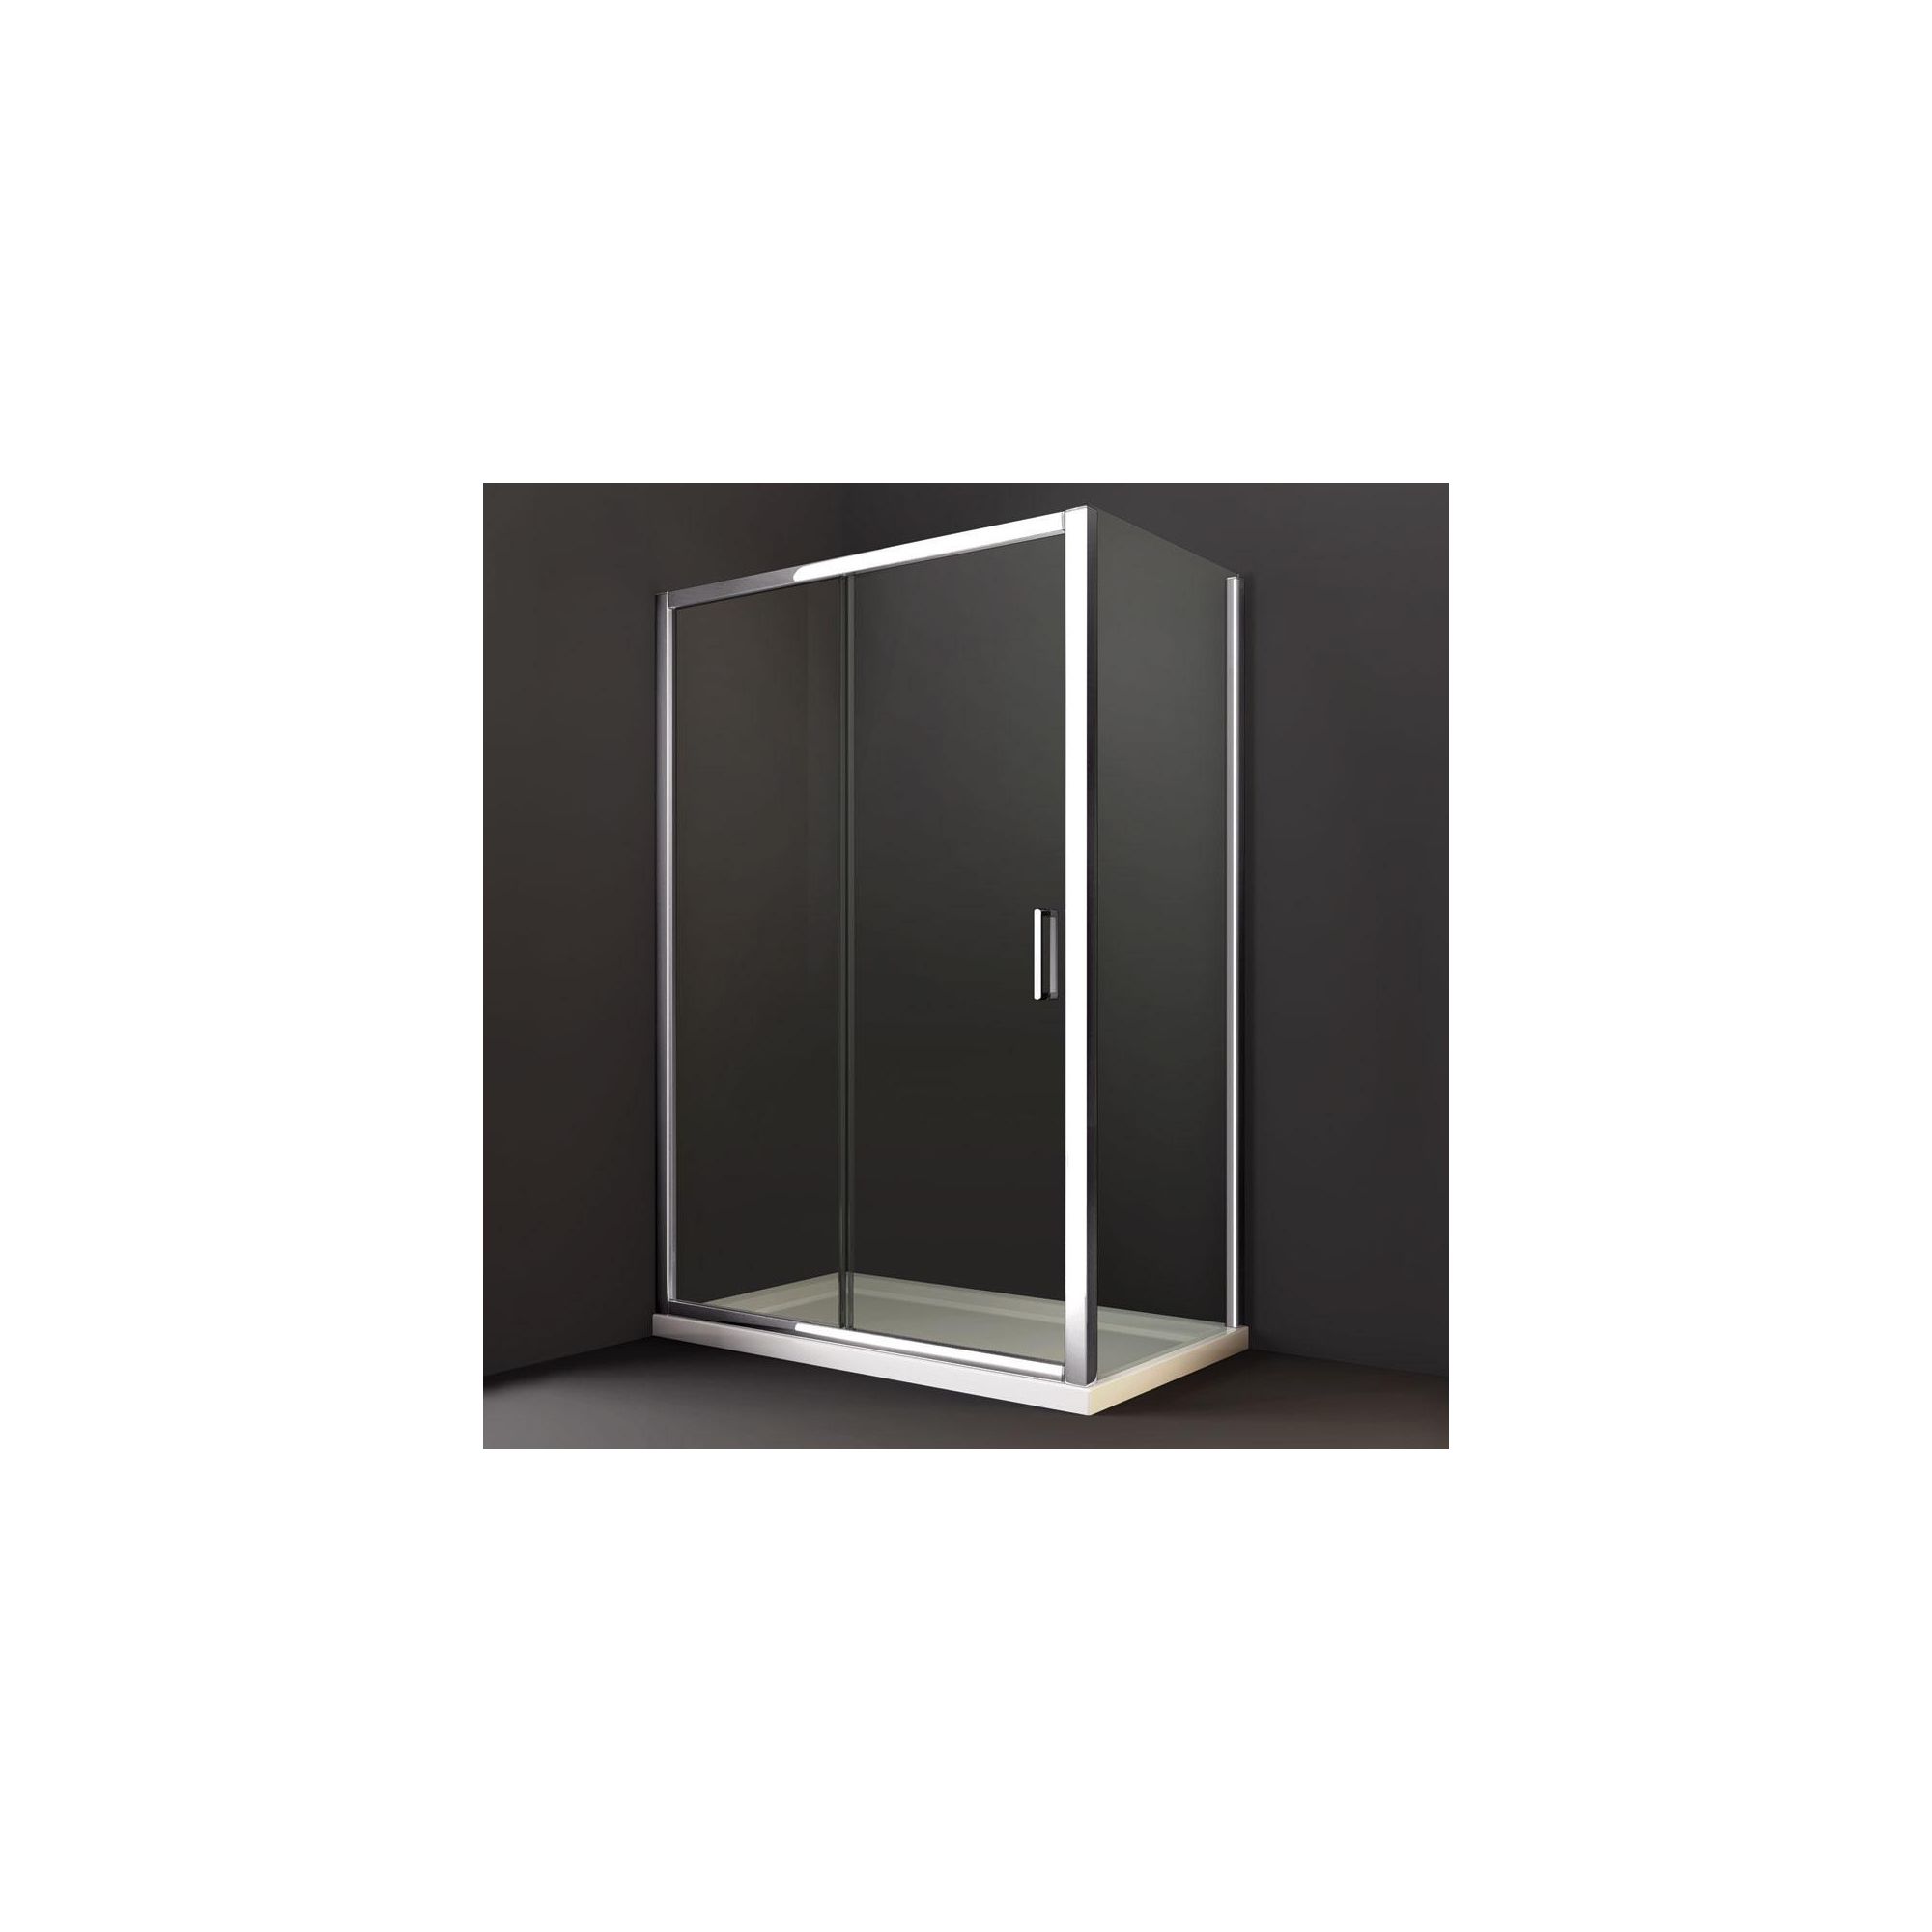 Merlyn Series 8 Sliding Shower Door, 1600mm Wide, Chrome Frame, 8mm Glass at Tescos Direct